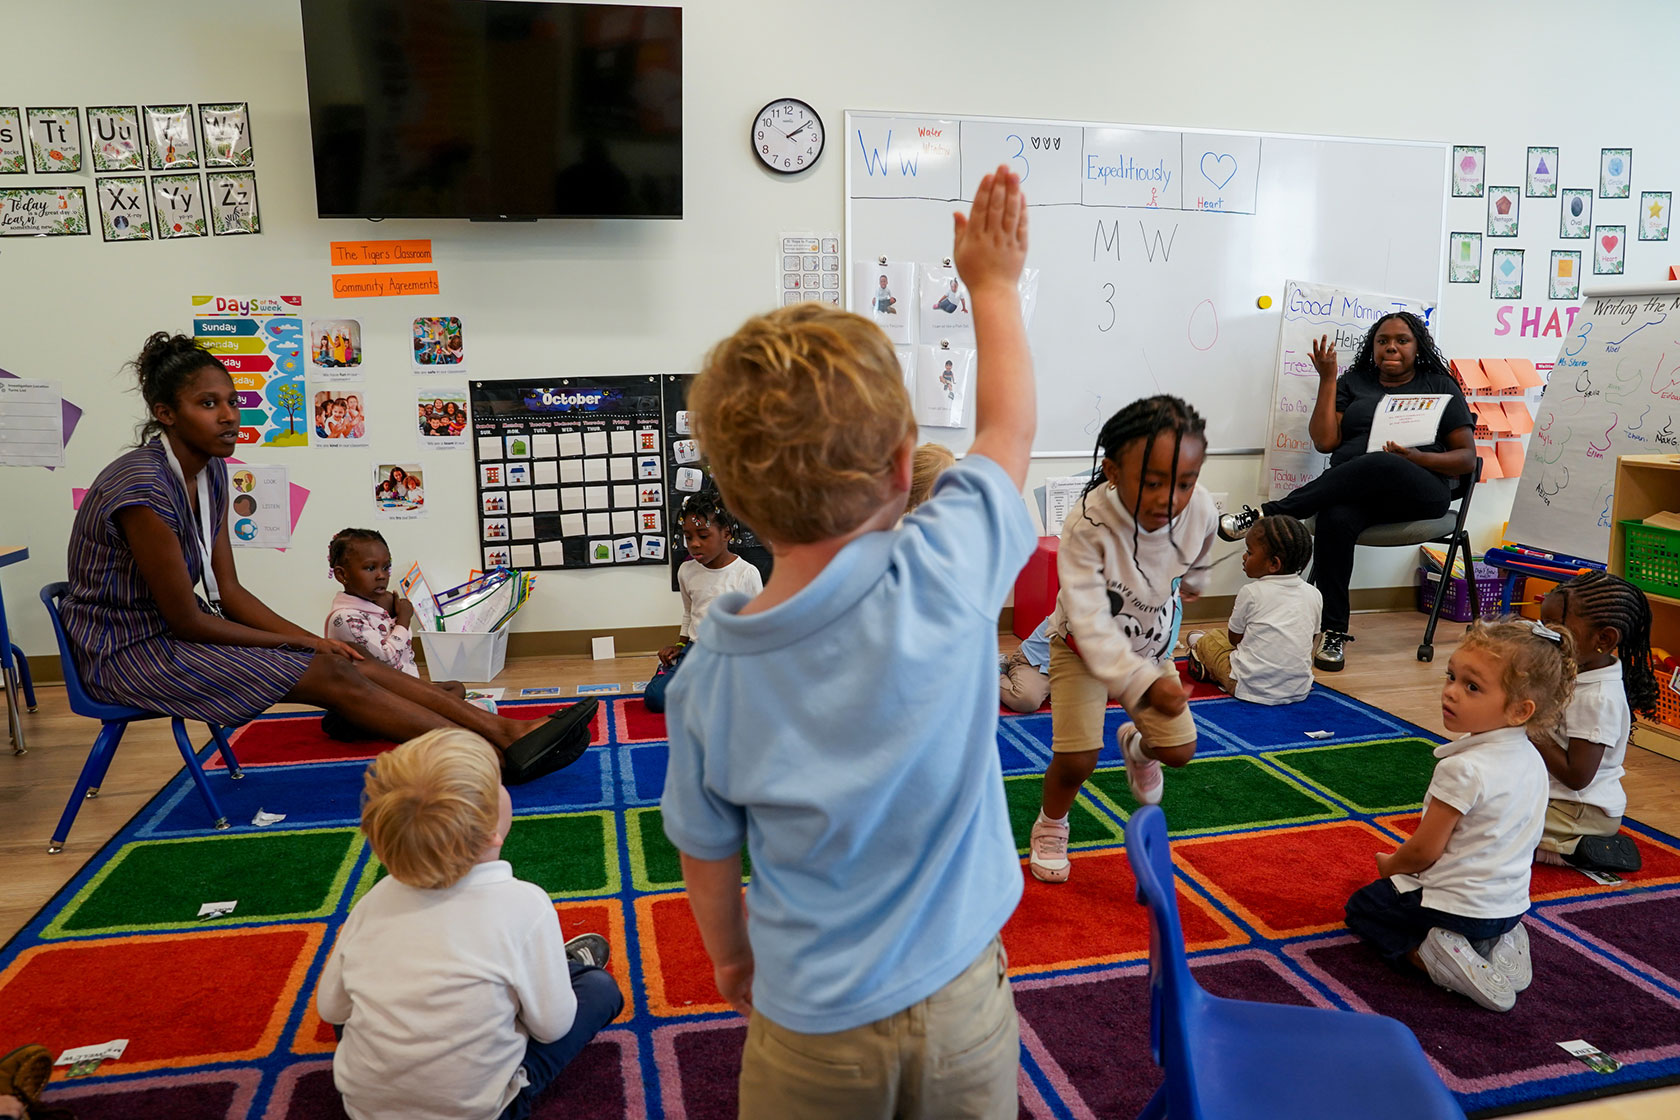 A preschool student raises their hand as teachers lead a class at an early learning public charter school.